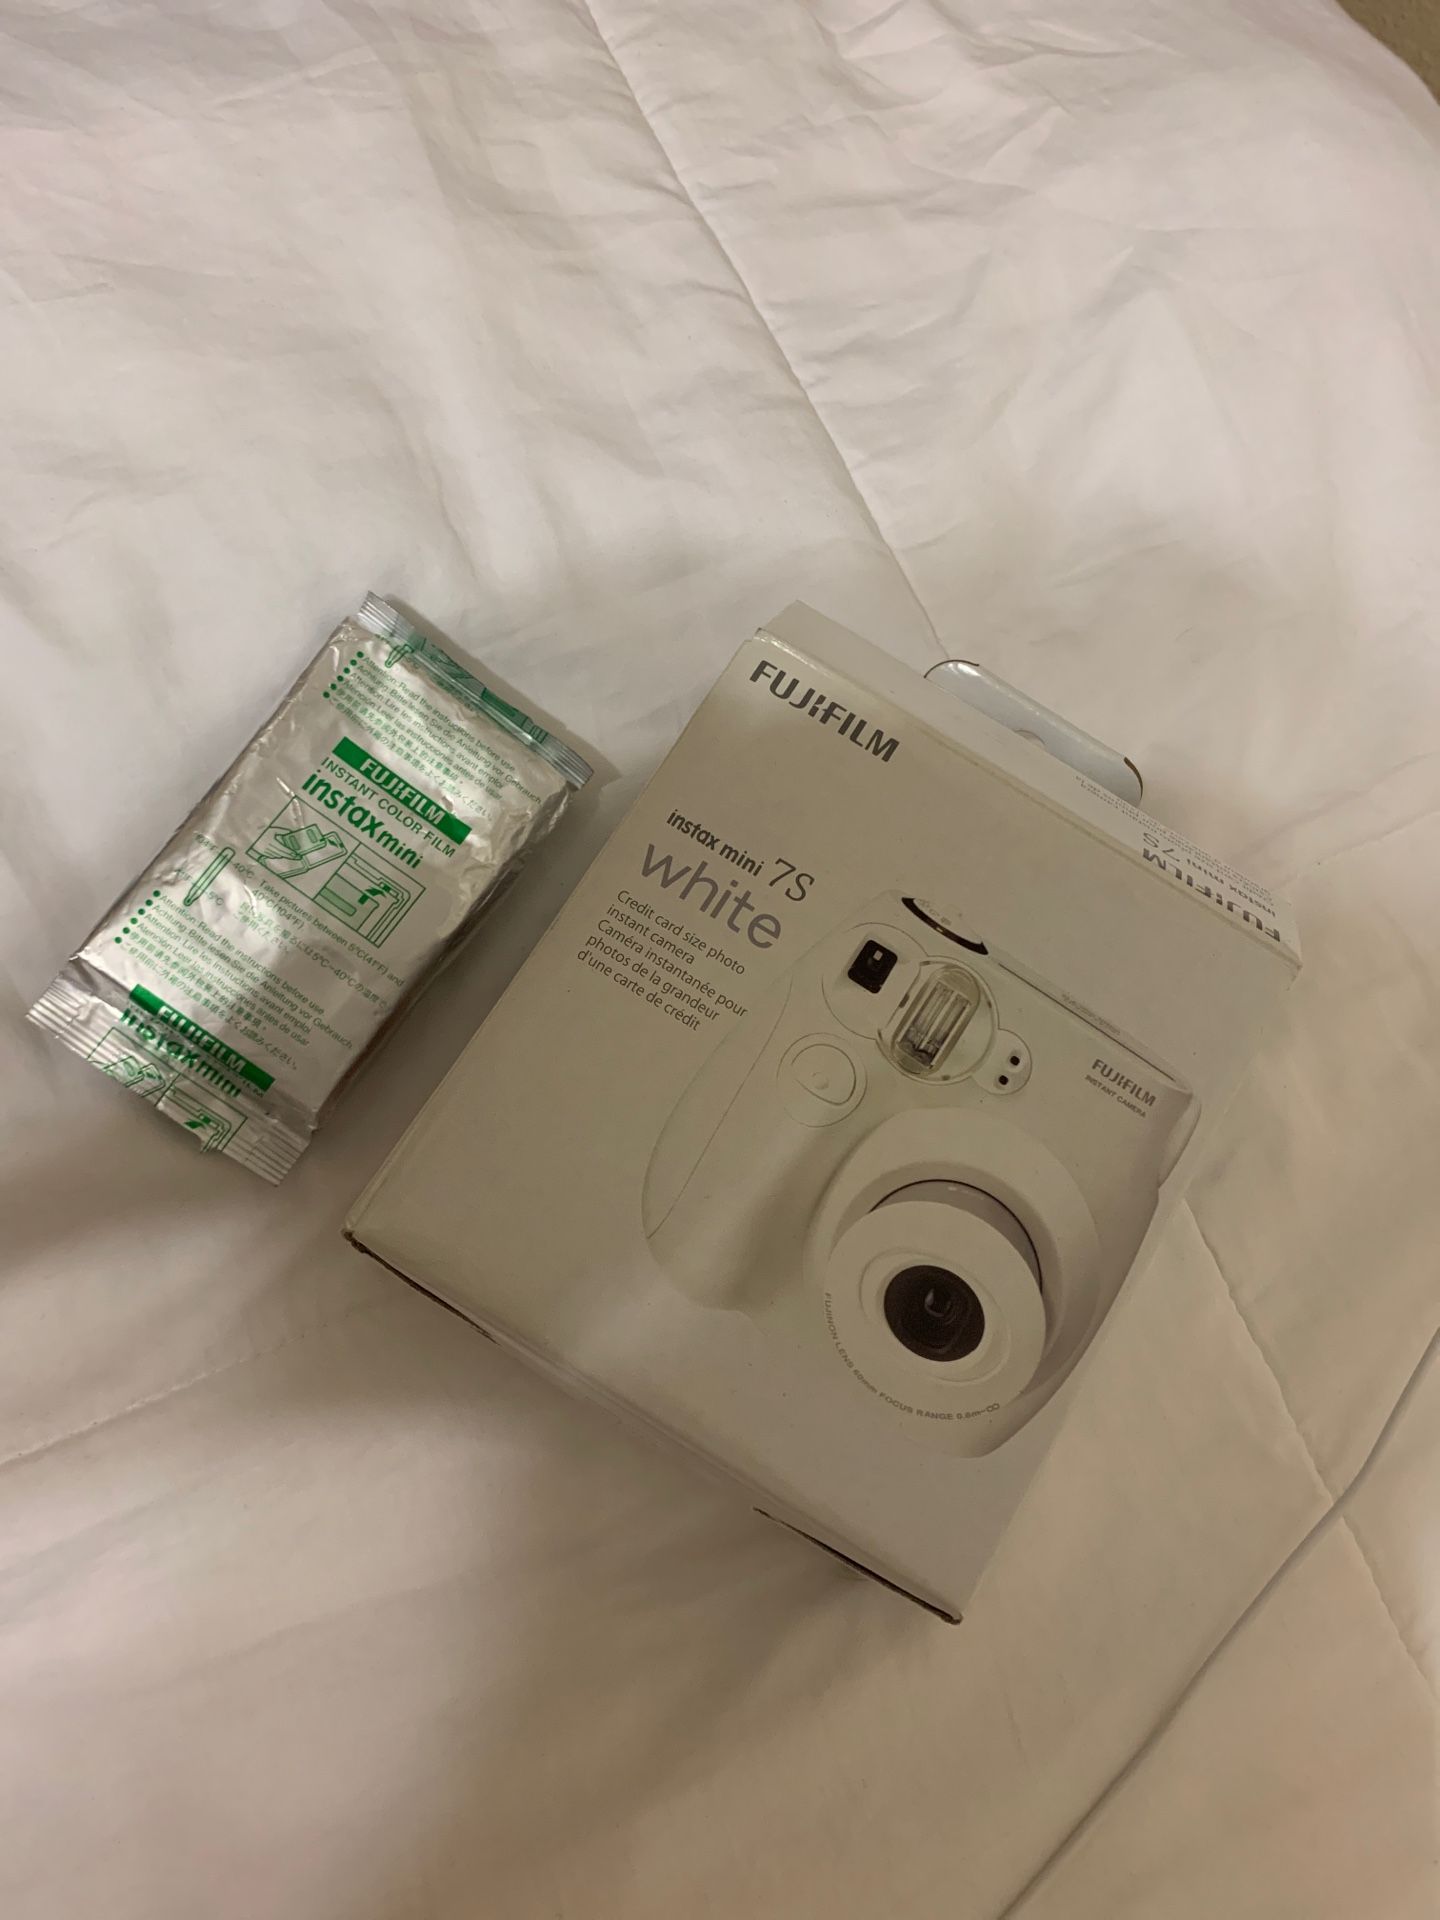 Fuji film mini camera and one pack of film